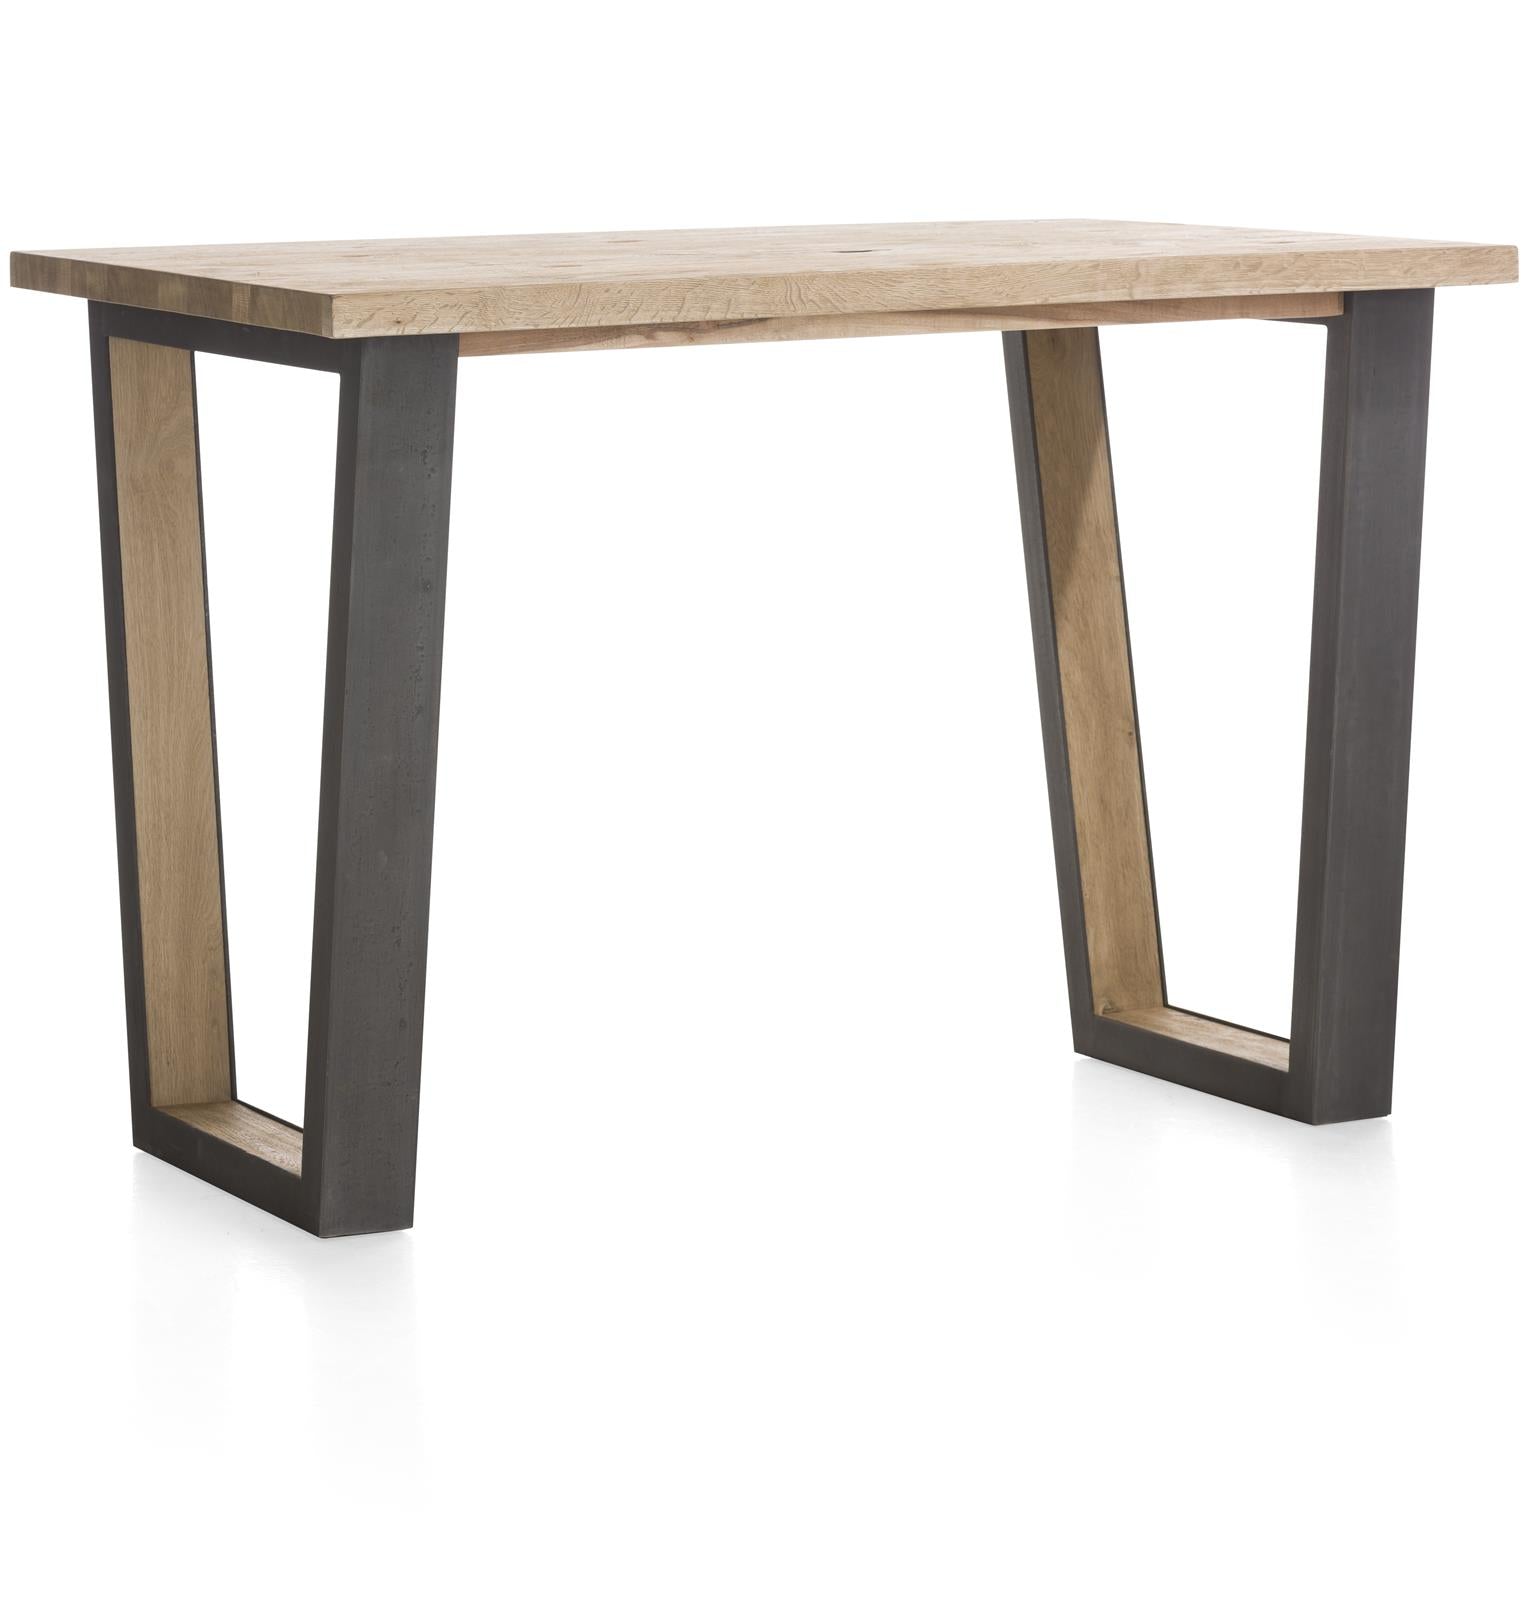 Habufa Metalox Bar Tables in Oak-bar Tables-Habufa-130 cms-U shape metal legs wood insert-Wavy edge-Against The Grain Furniture